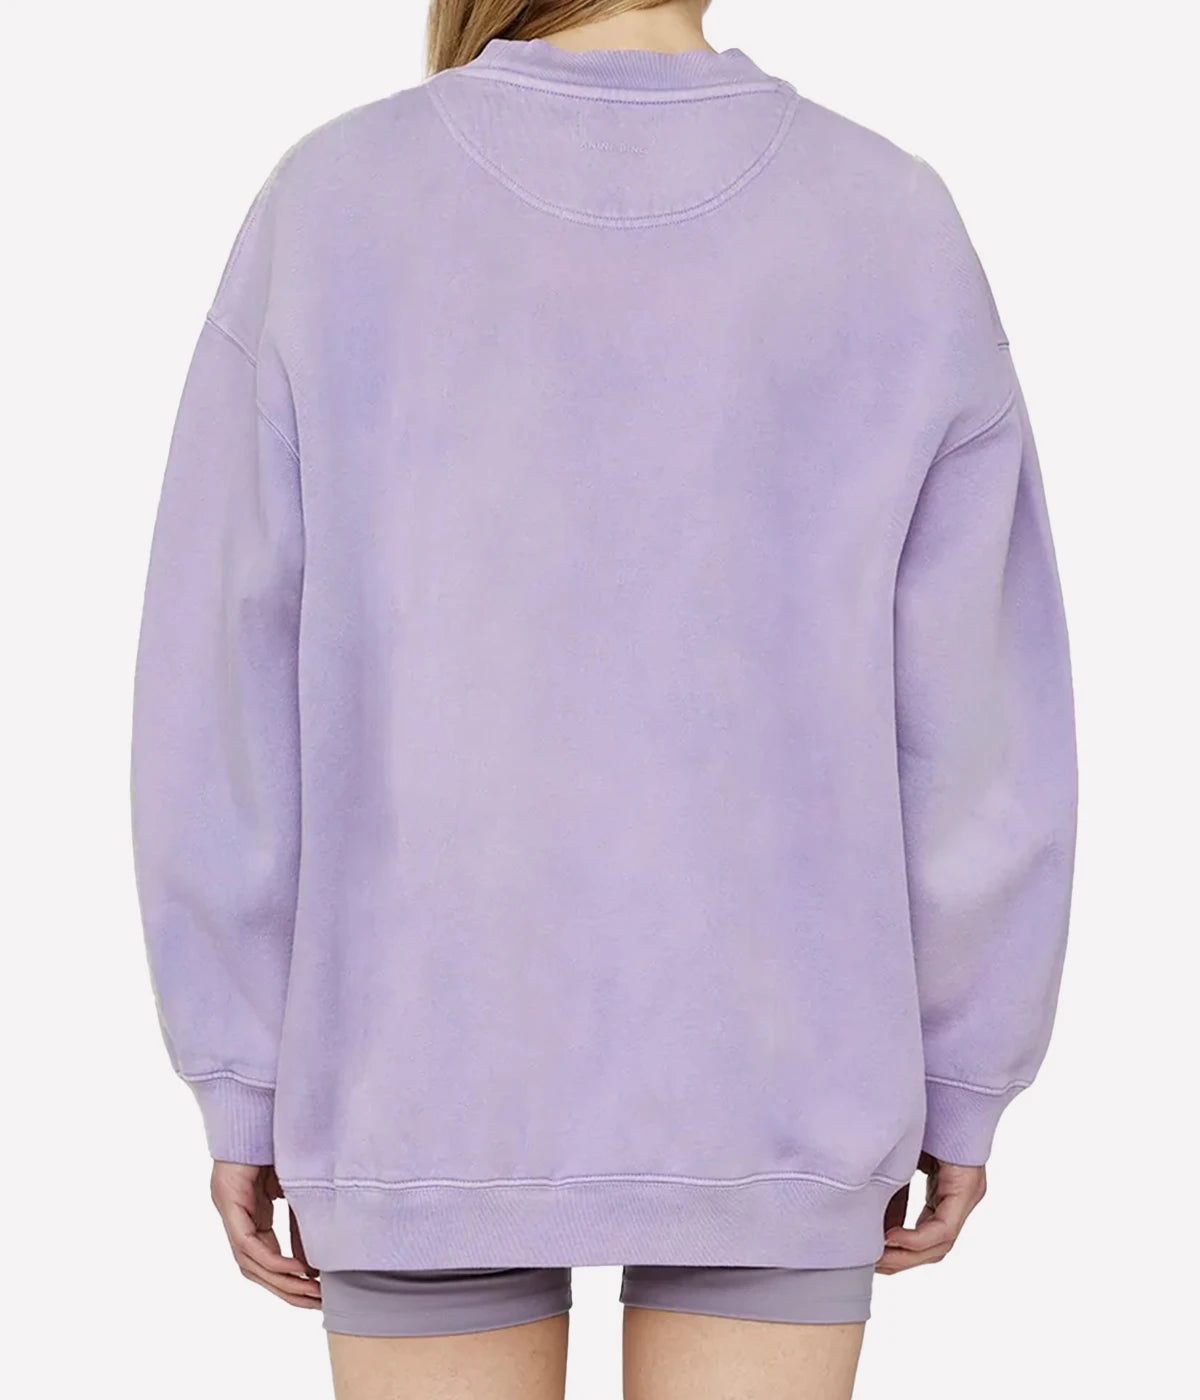 Tyler Sweatshirt in Washed Lavender